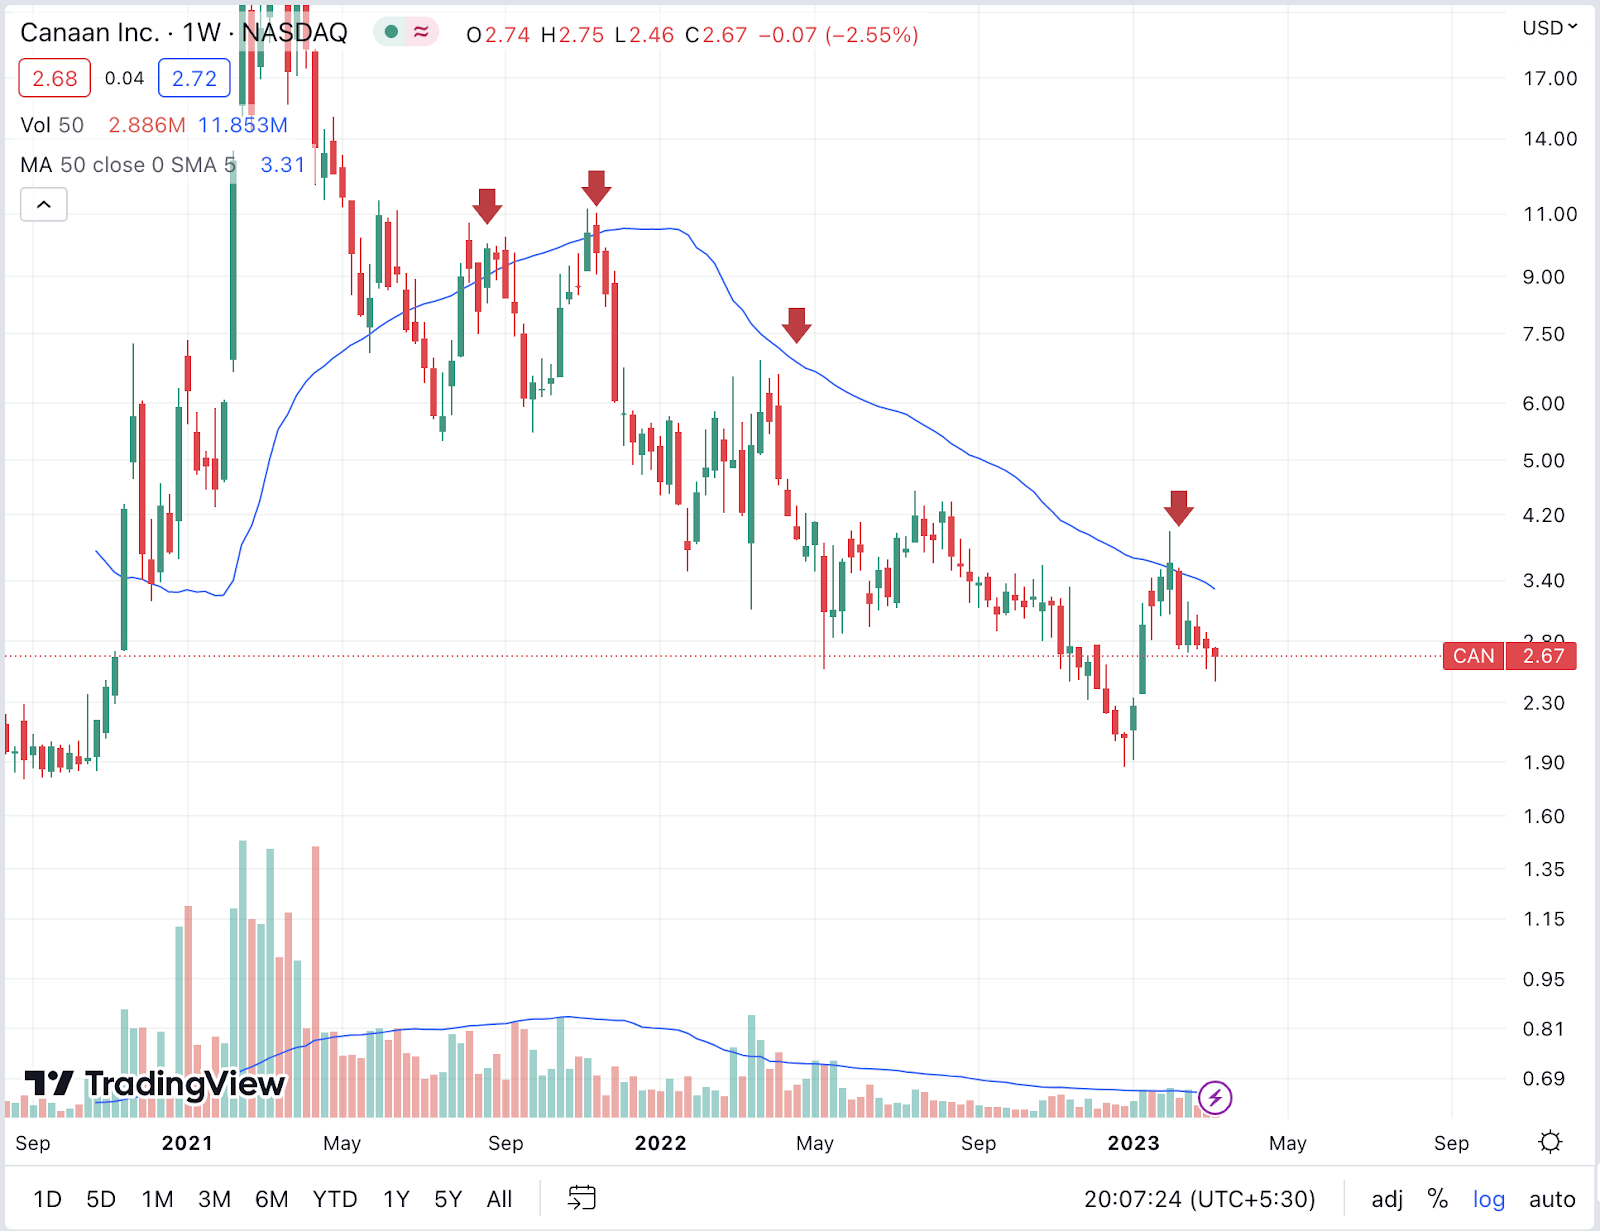 Canaan crypto stock chart from TradingView